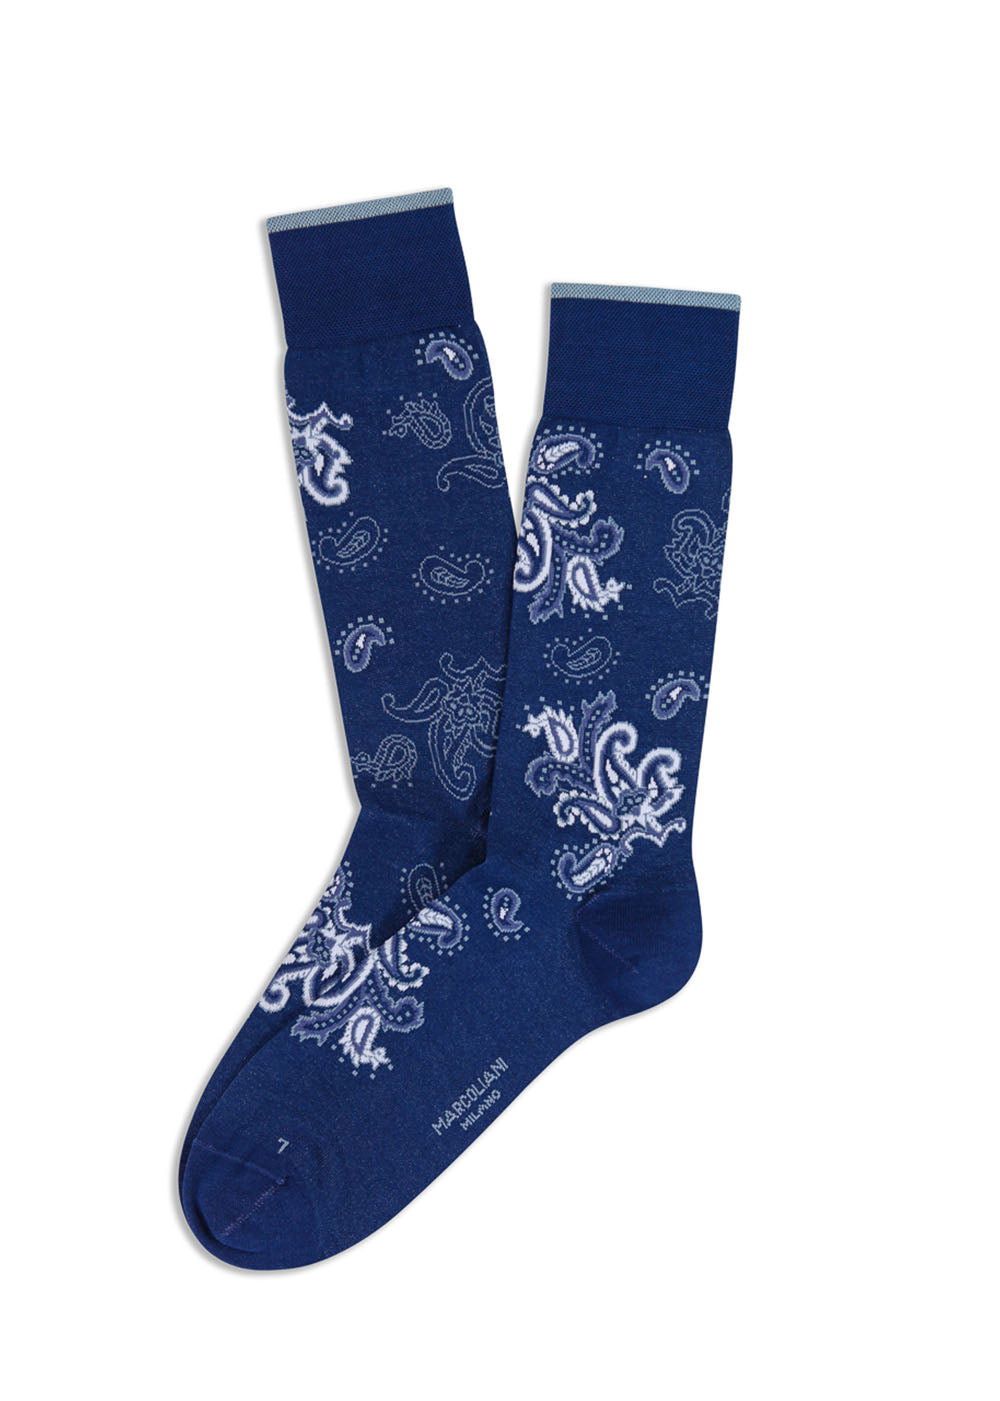 Pima Cotton Jali Paisley Socks - Dark denim blue - Marcoliani Canada - Danali